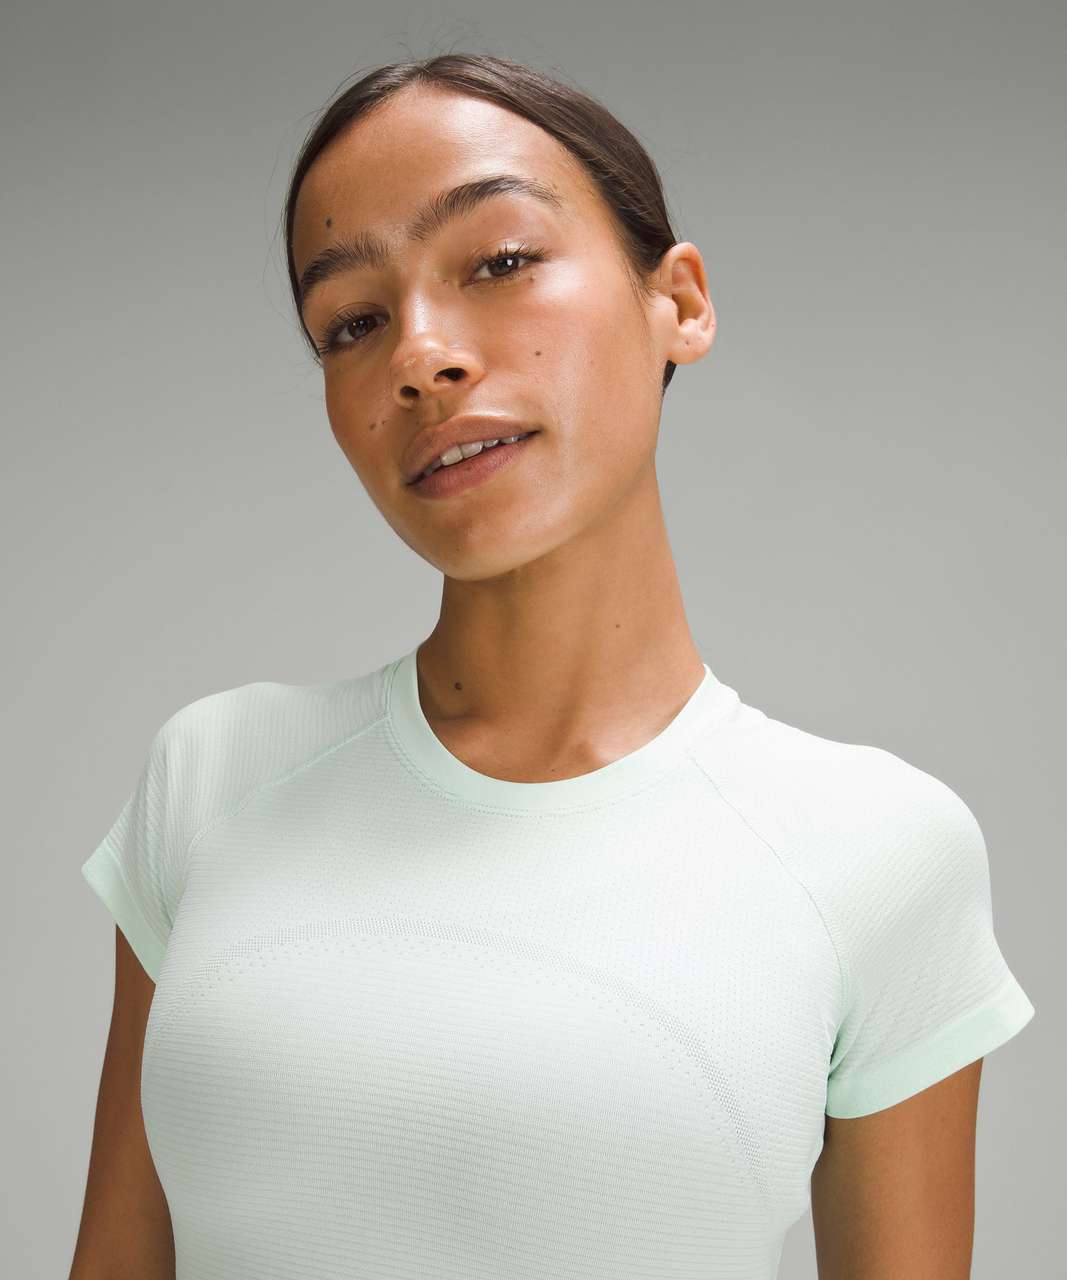 Lululemon Swiftly Tech Cropped Short-Sleeve Shirt 2.0 - Mint Moment / Mint Moment